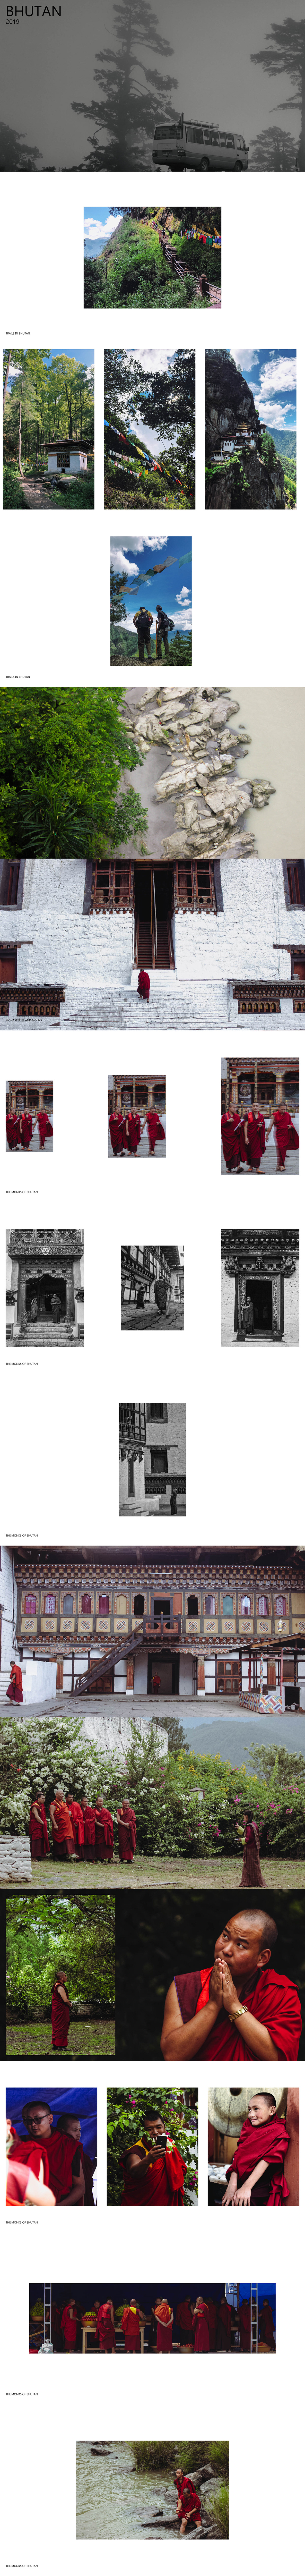 Travel blog bhutan monks kids Travel documentation photojournal